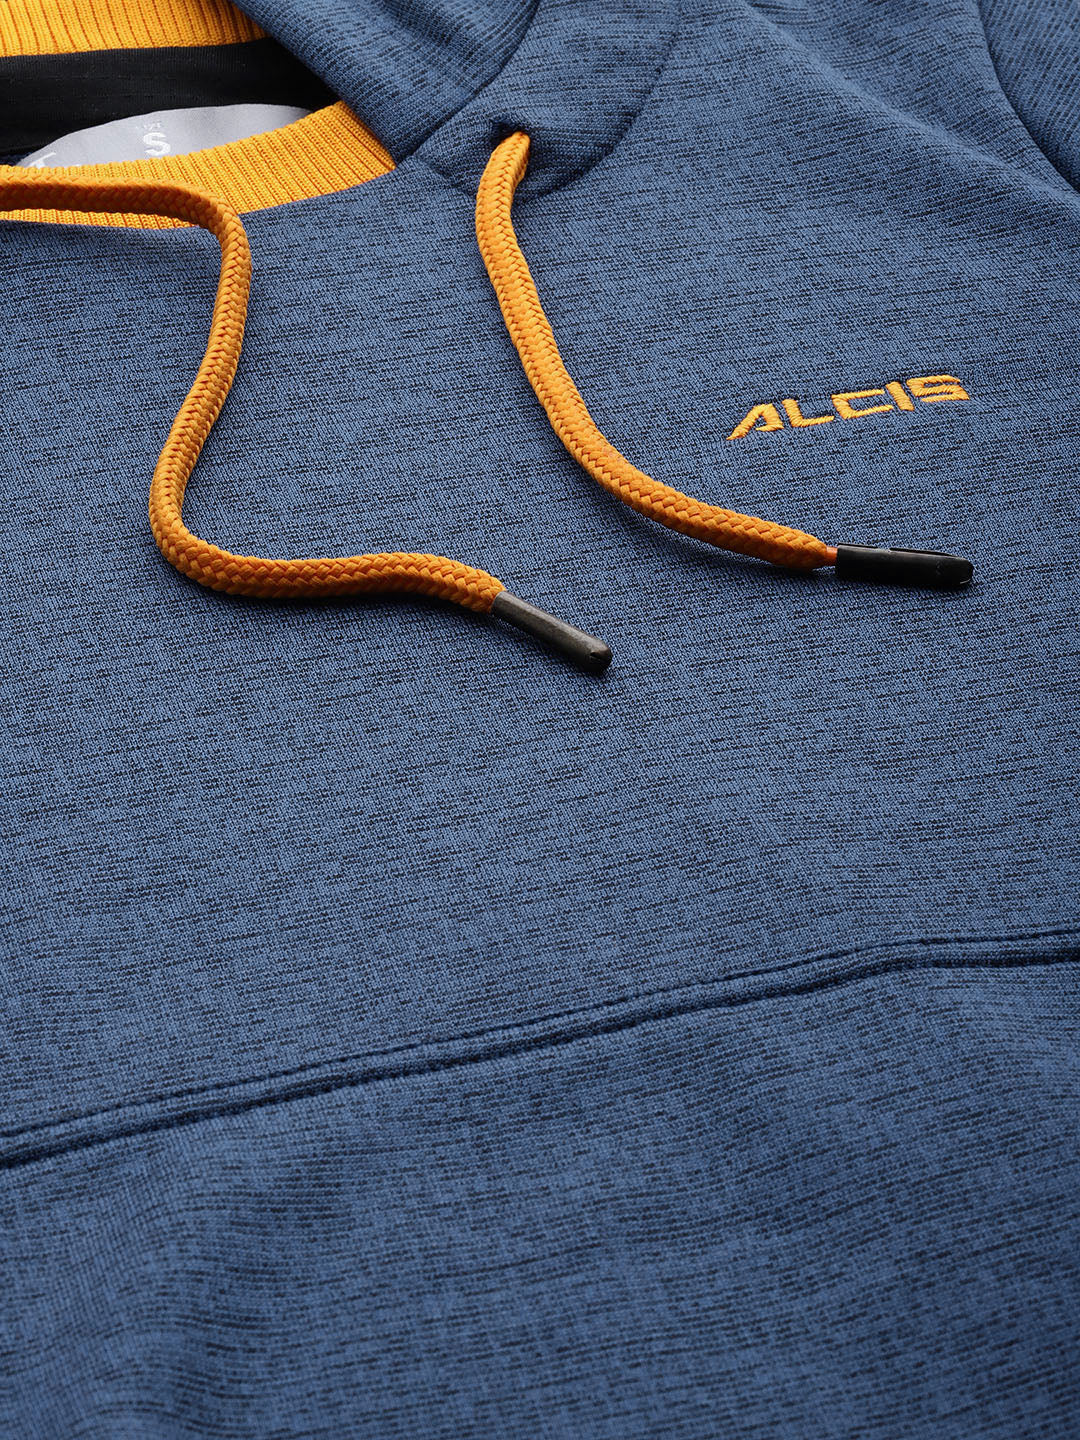 Alcis Women Navy Blue Self Design Hooded Sweatshirt